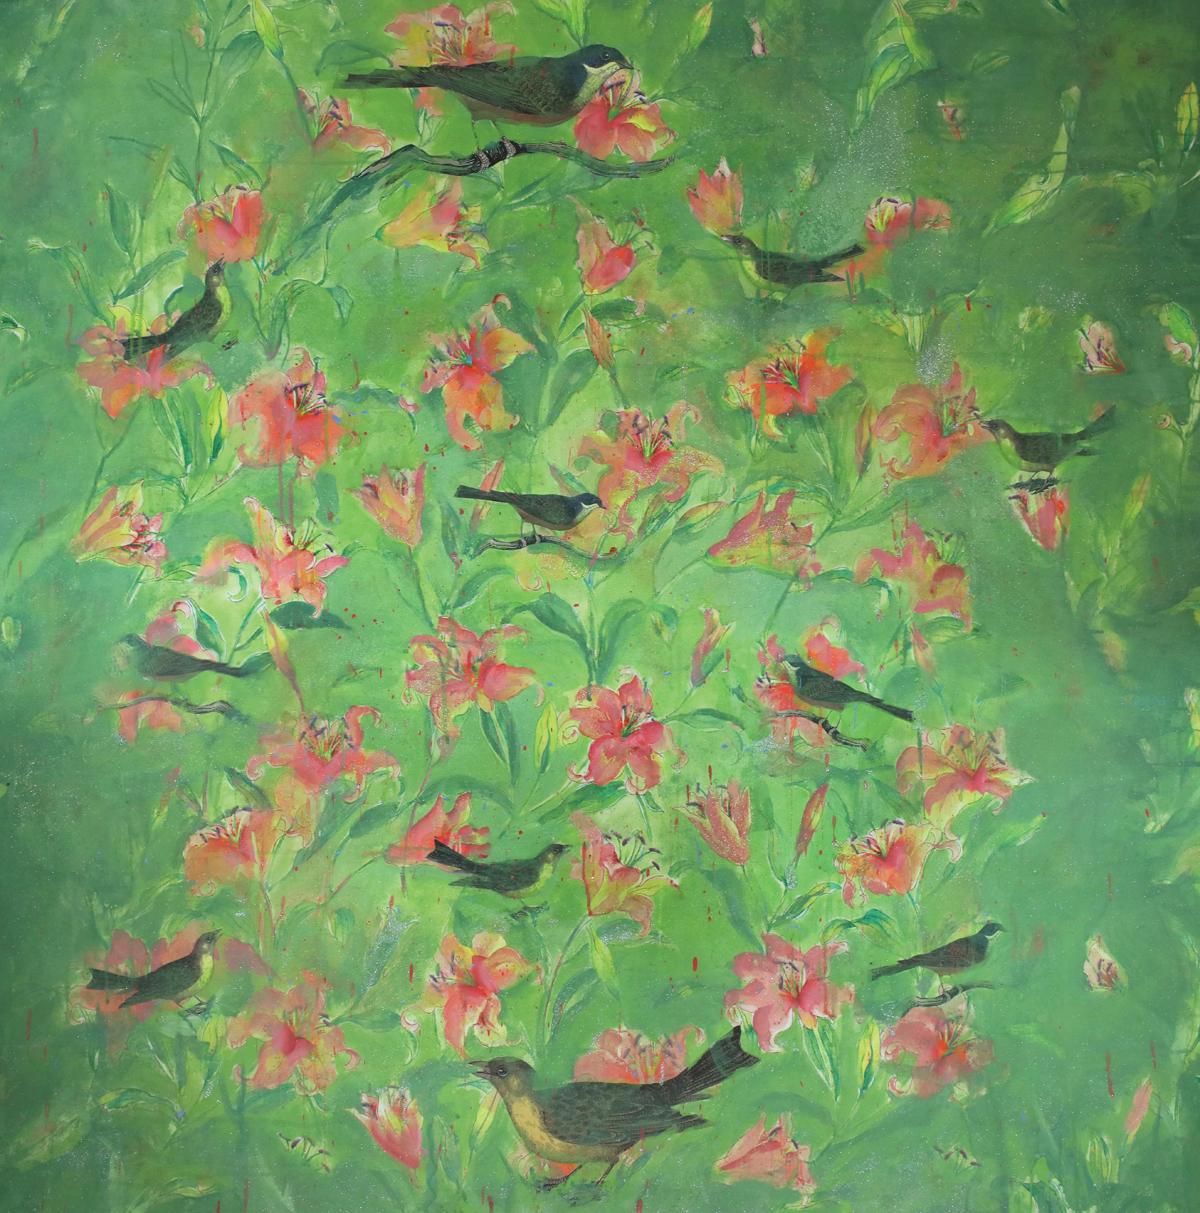 A Flock of Flowers - Mixed Media Art by Bruce Helander